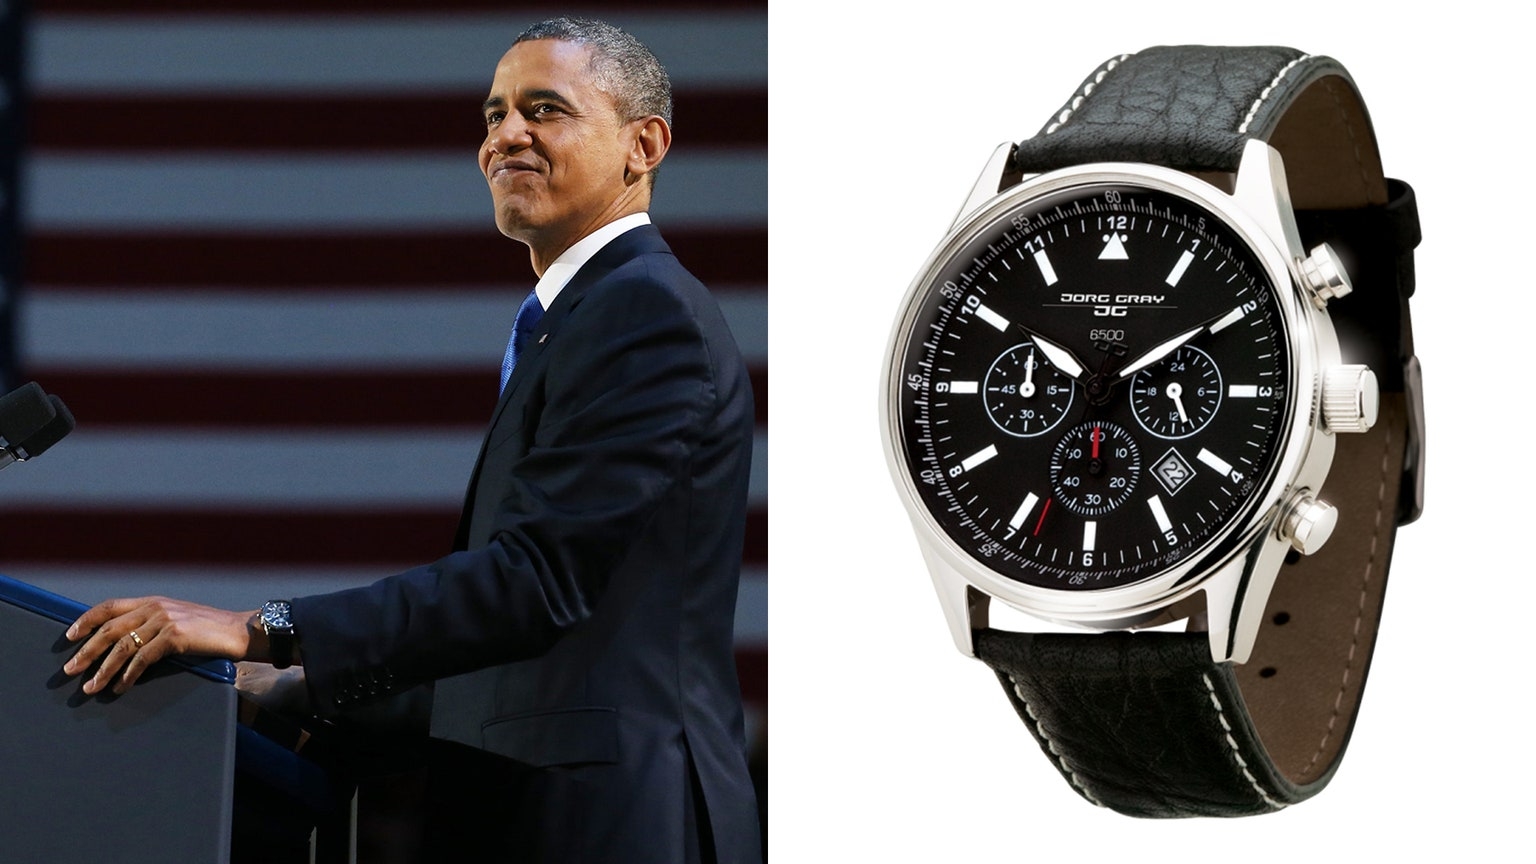 Đồng hồ Jorg Gray JG6500 của Barack Obama 